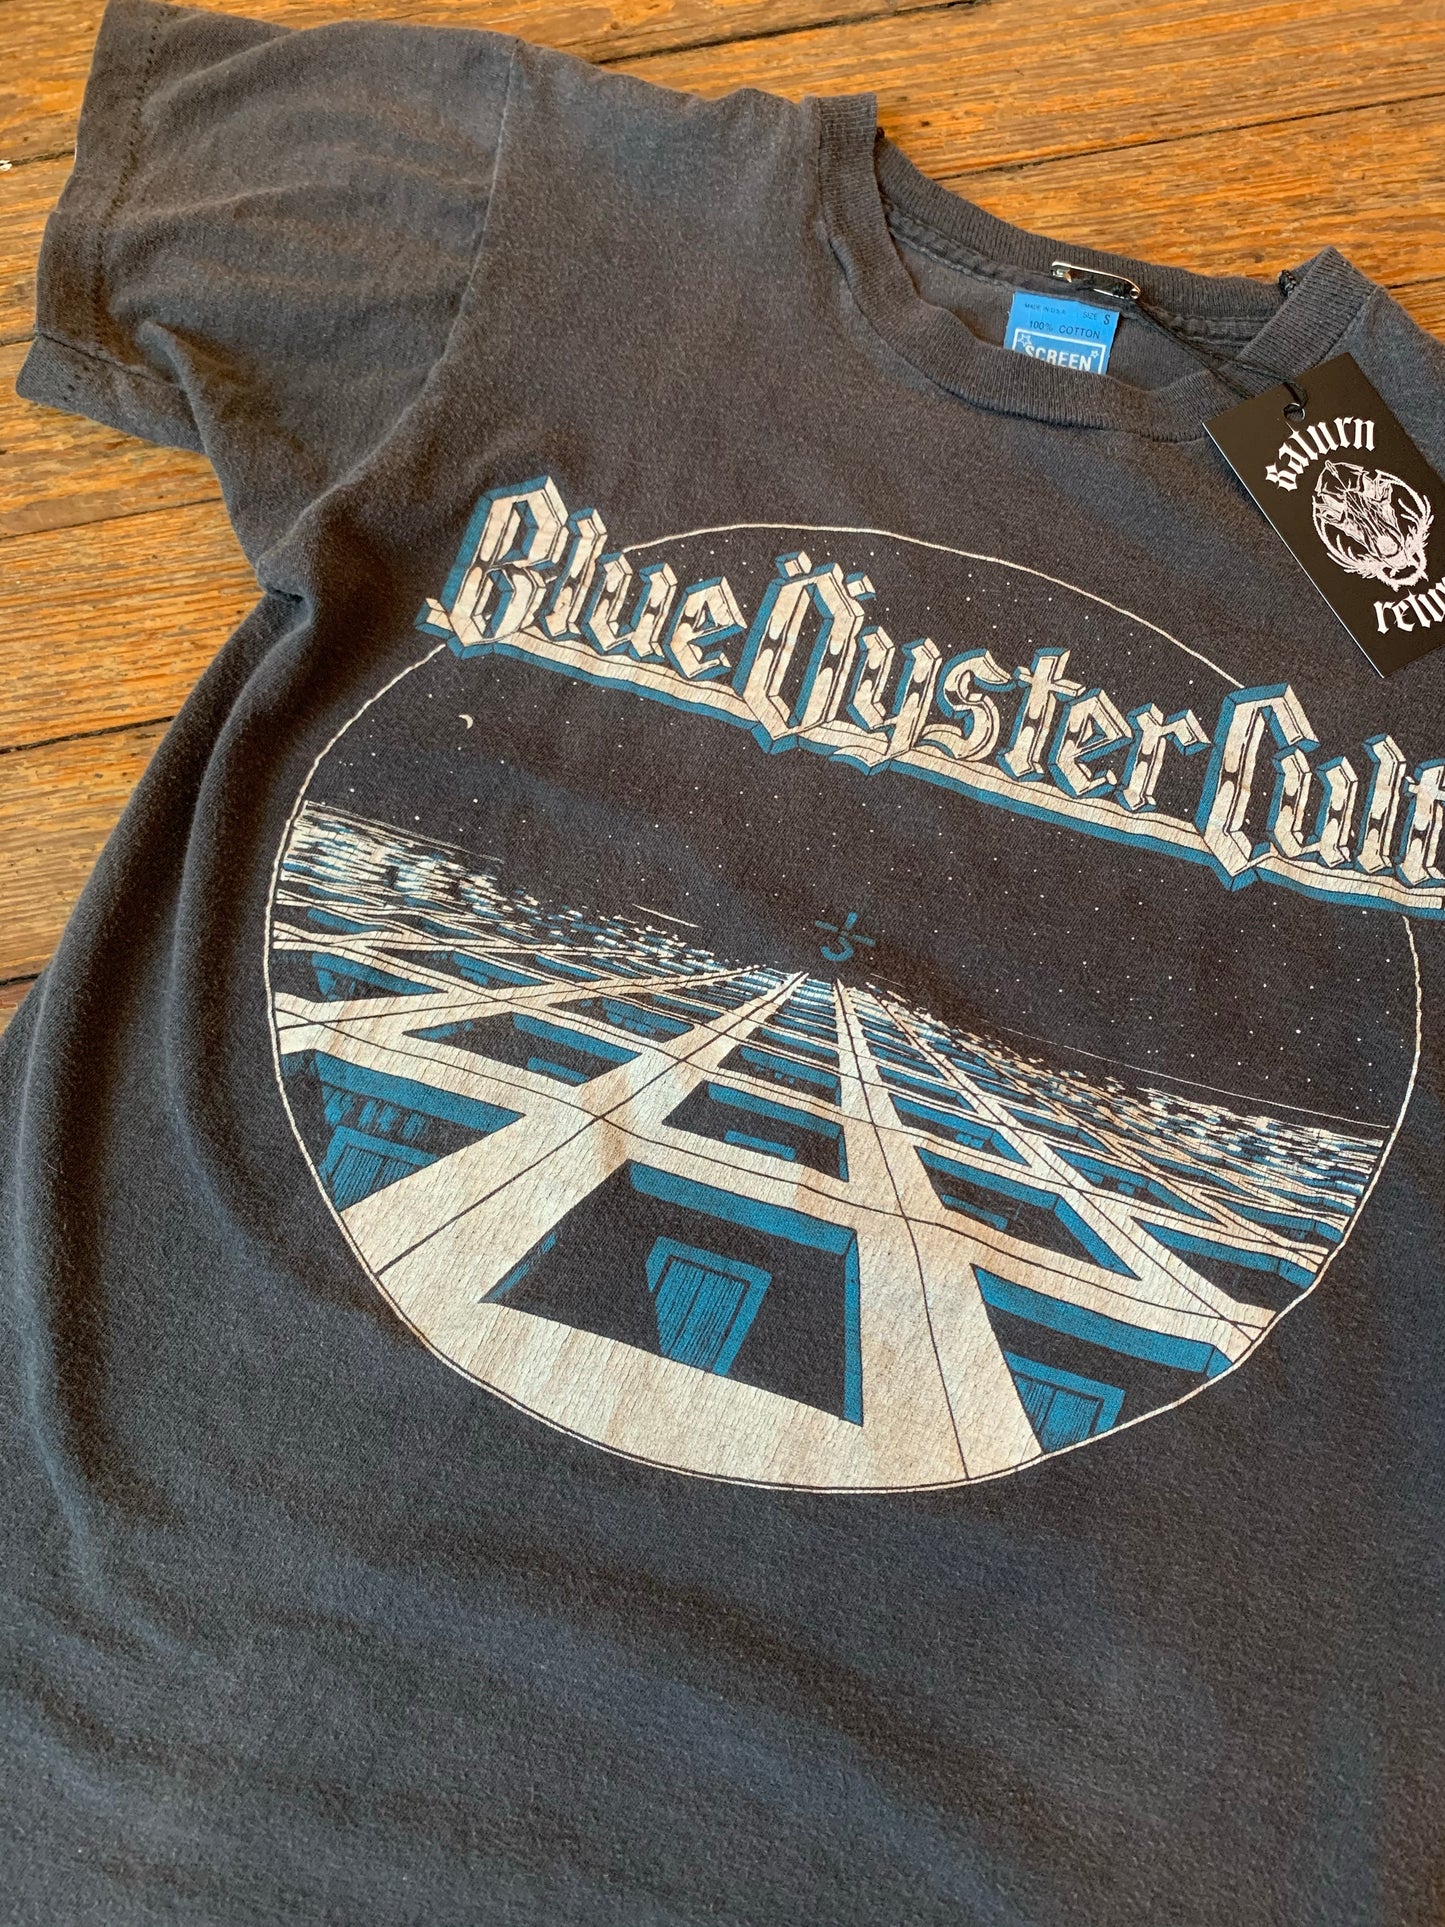 Vintage Blue Öyster Cult Self-Titled Album Early 80’s T-Shirt